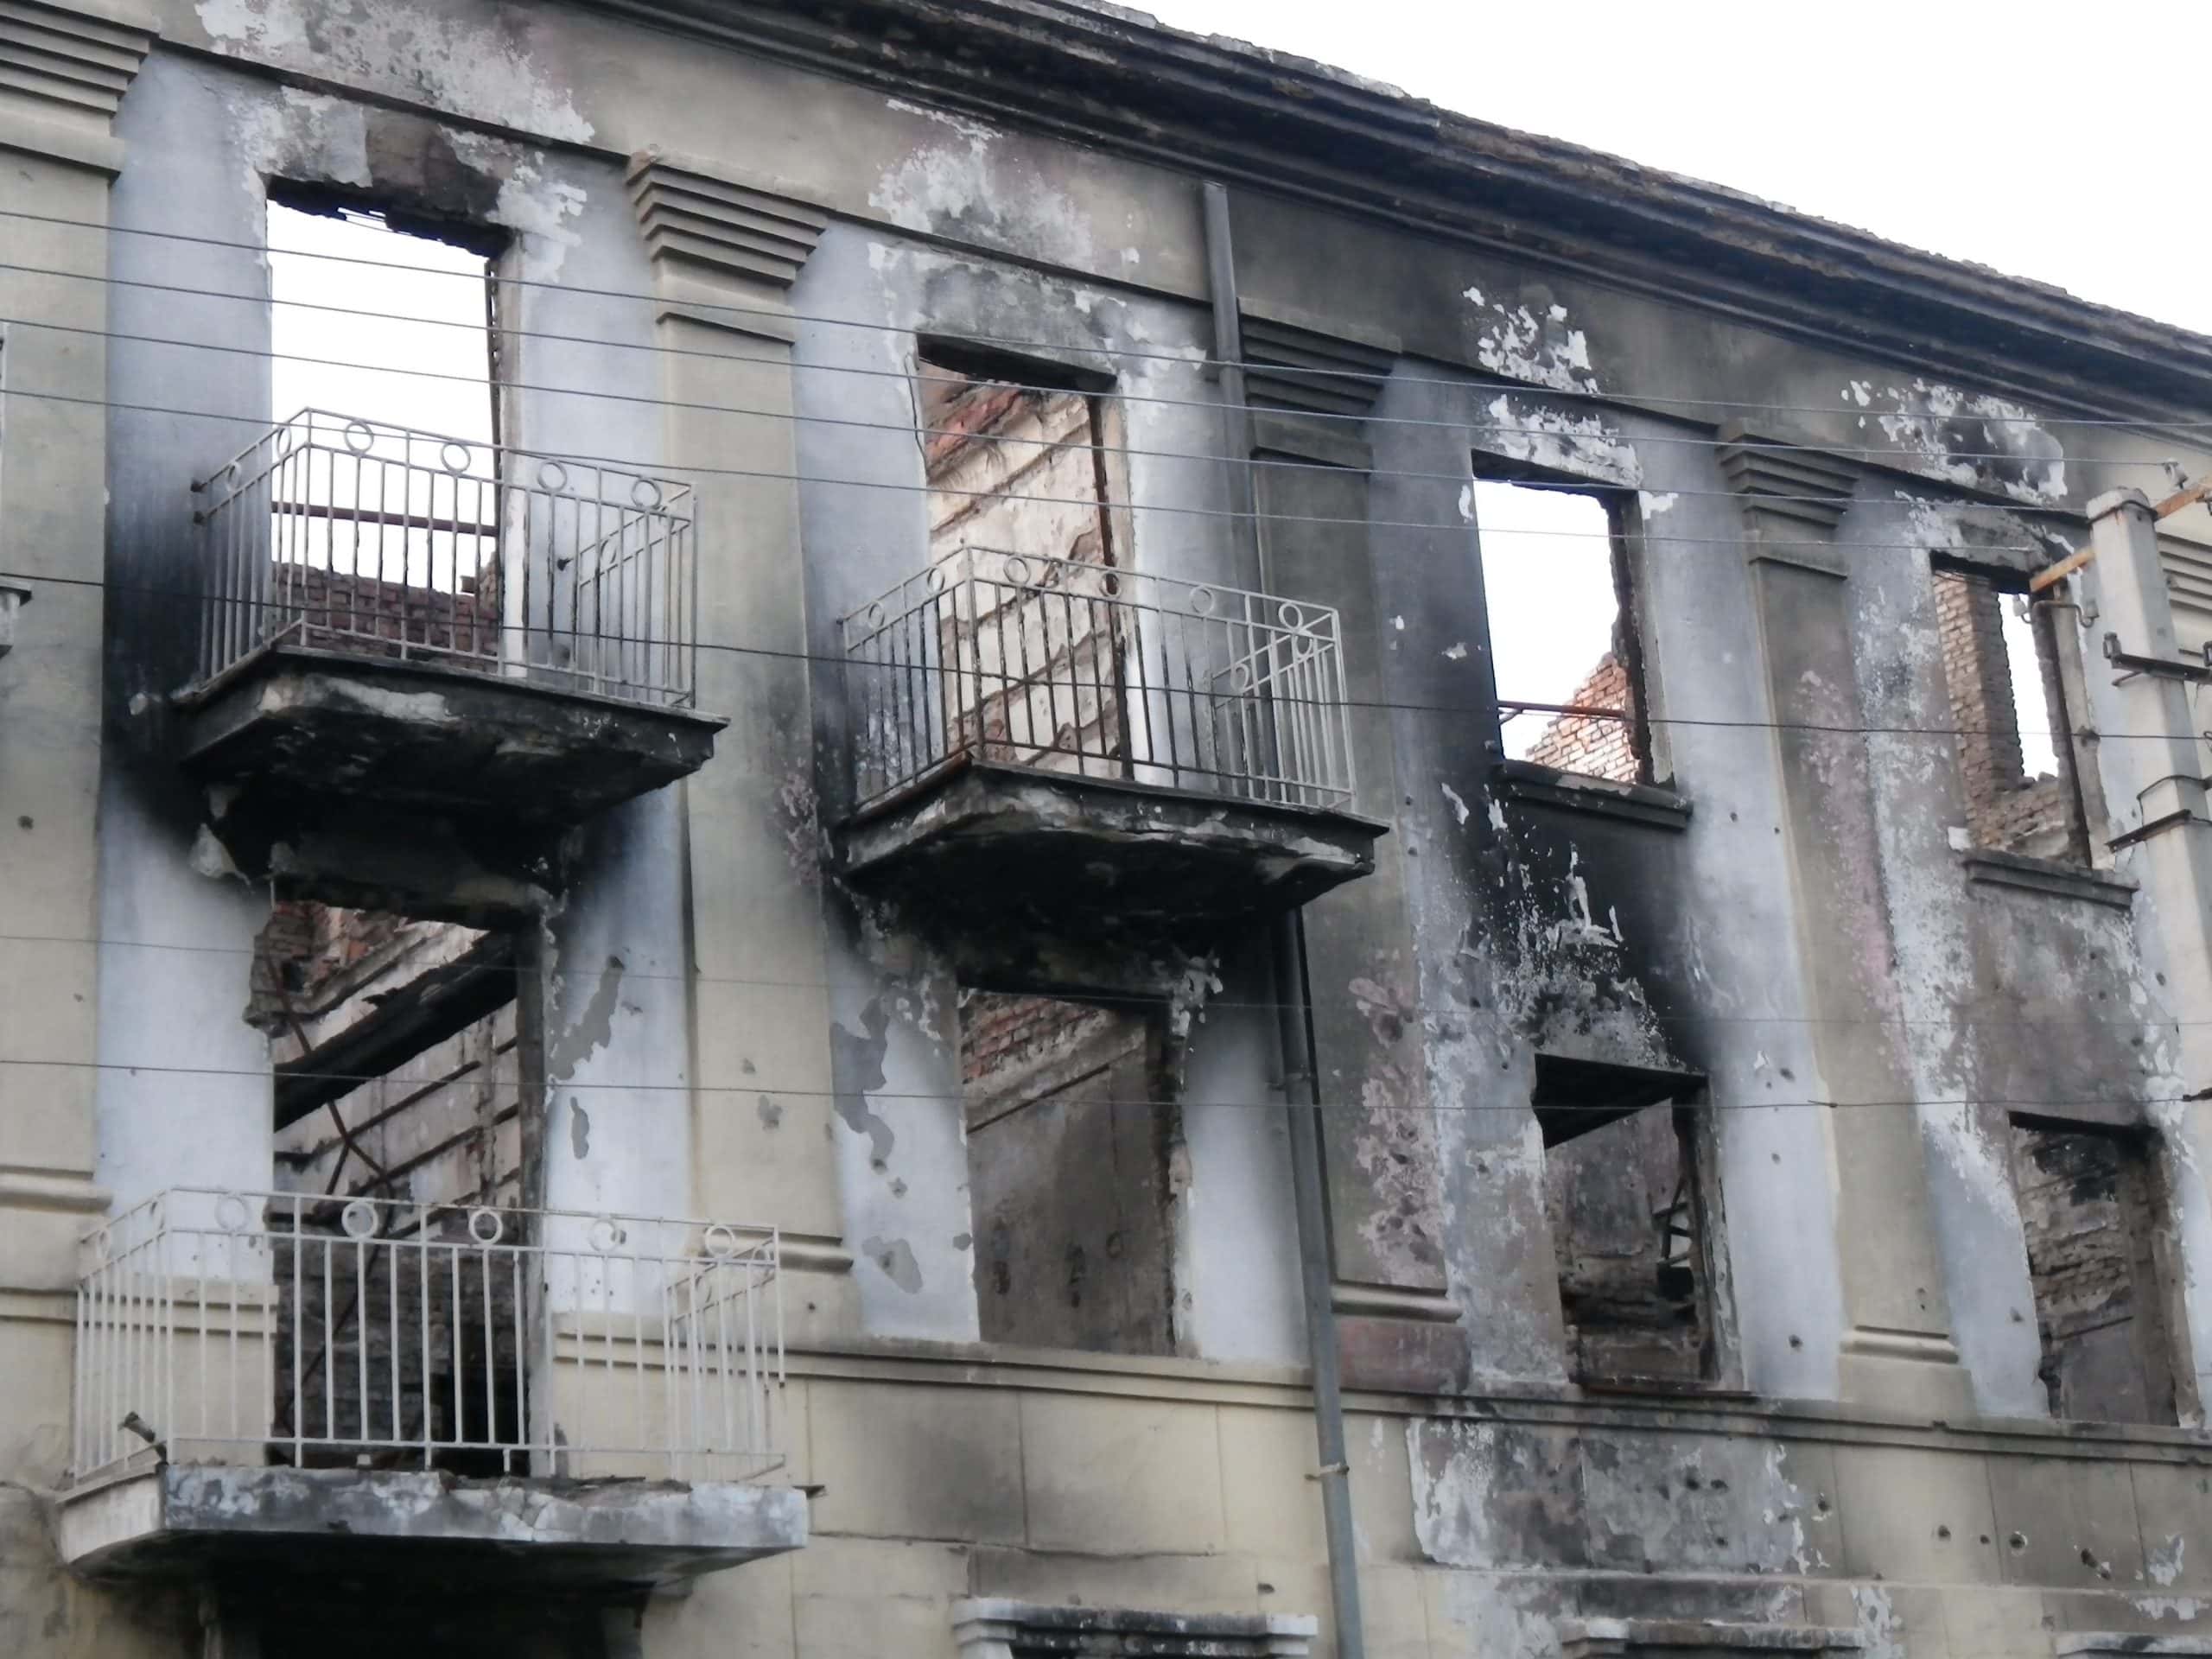 A Ukraine building with major damage